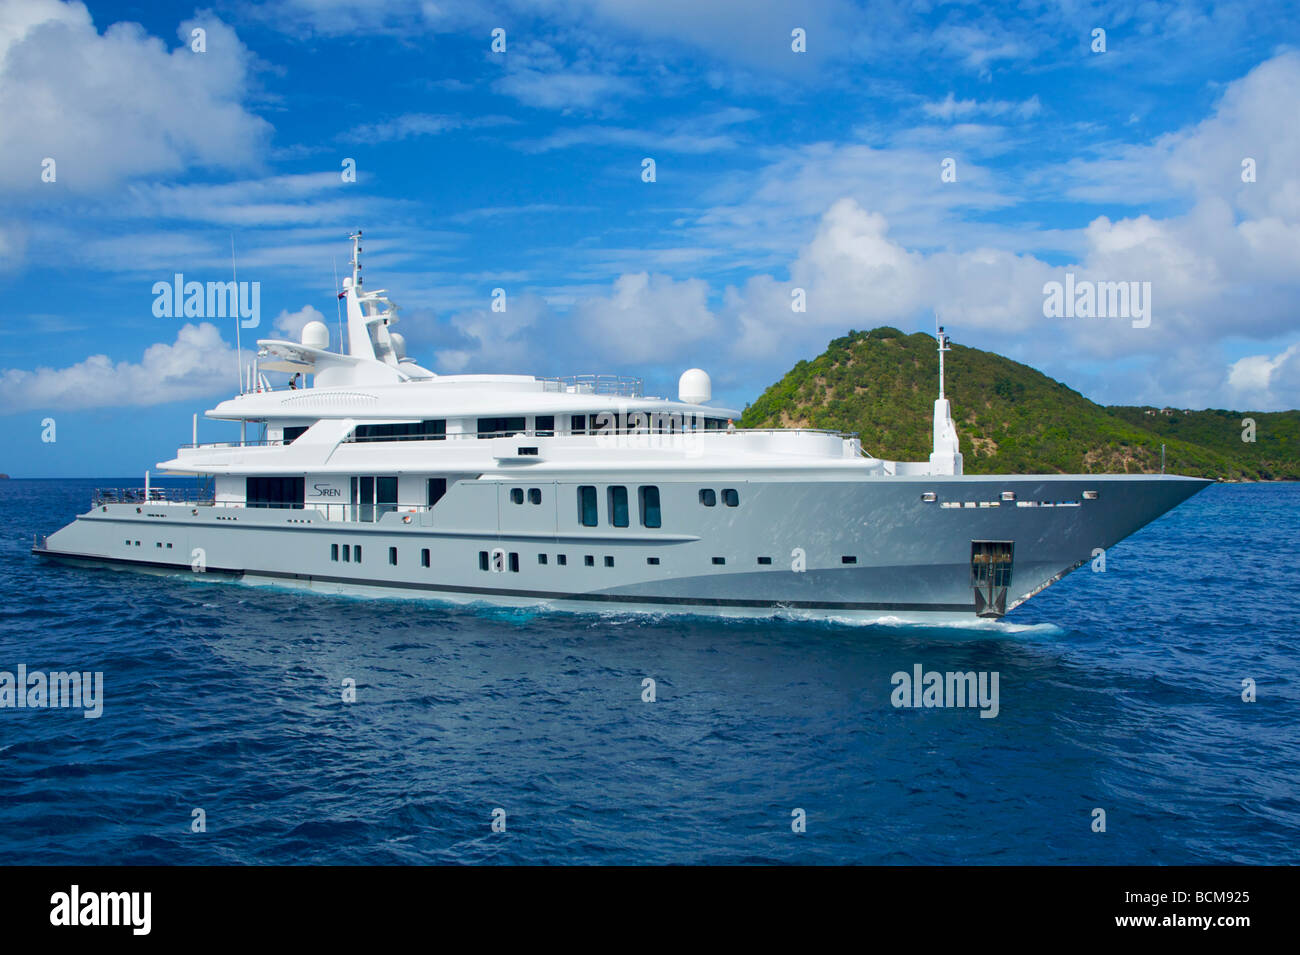 The large yacht "Siren" cruising near Guadelupe Island in the Caribbean  Stock Photo - Alamy